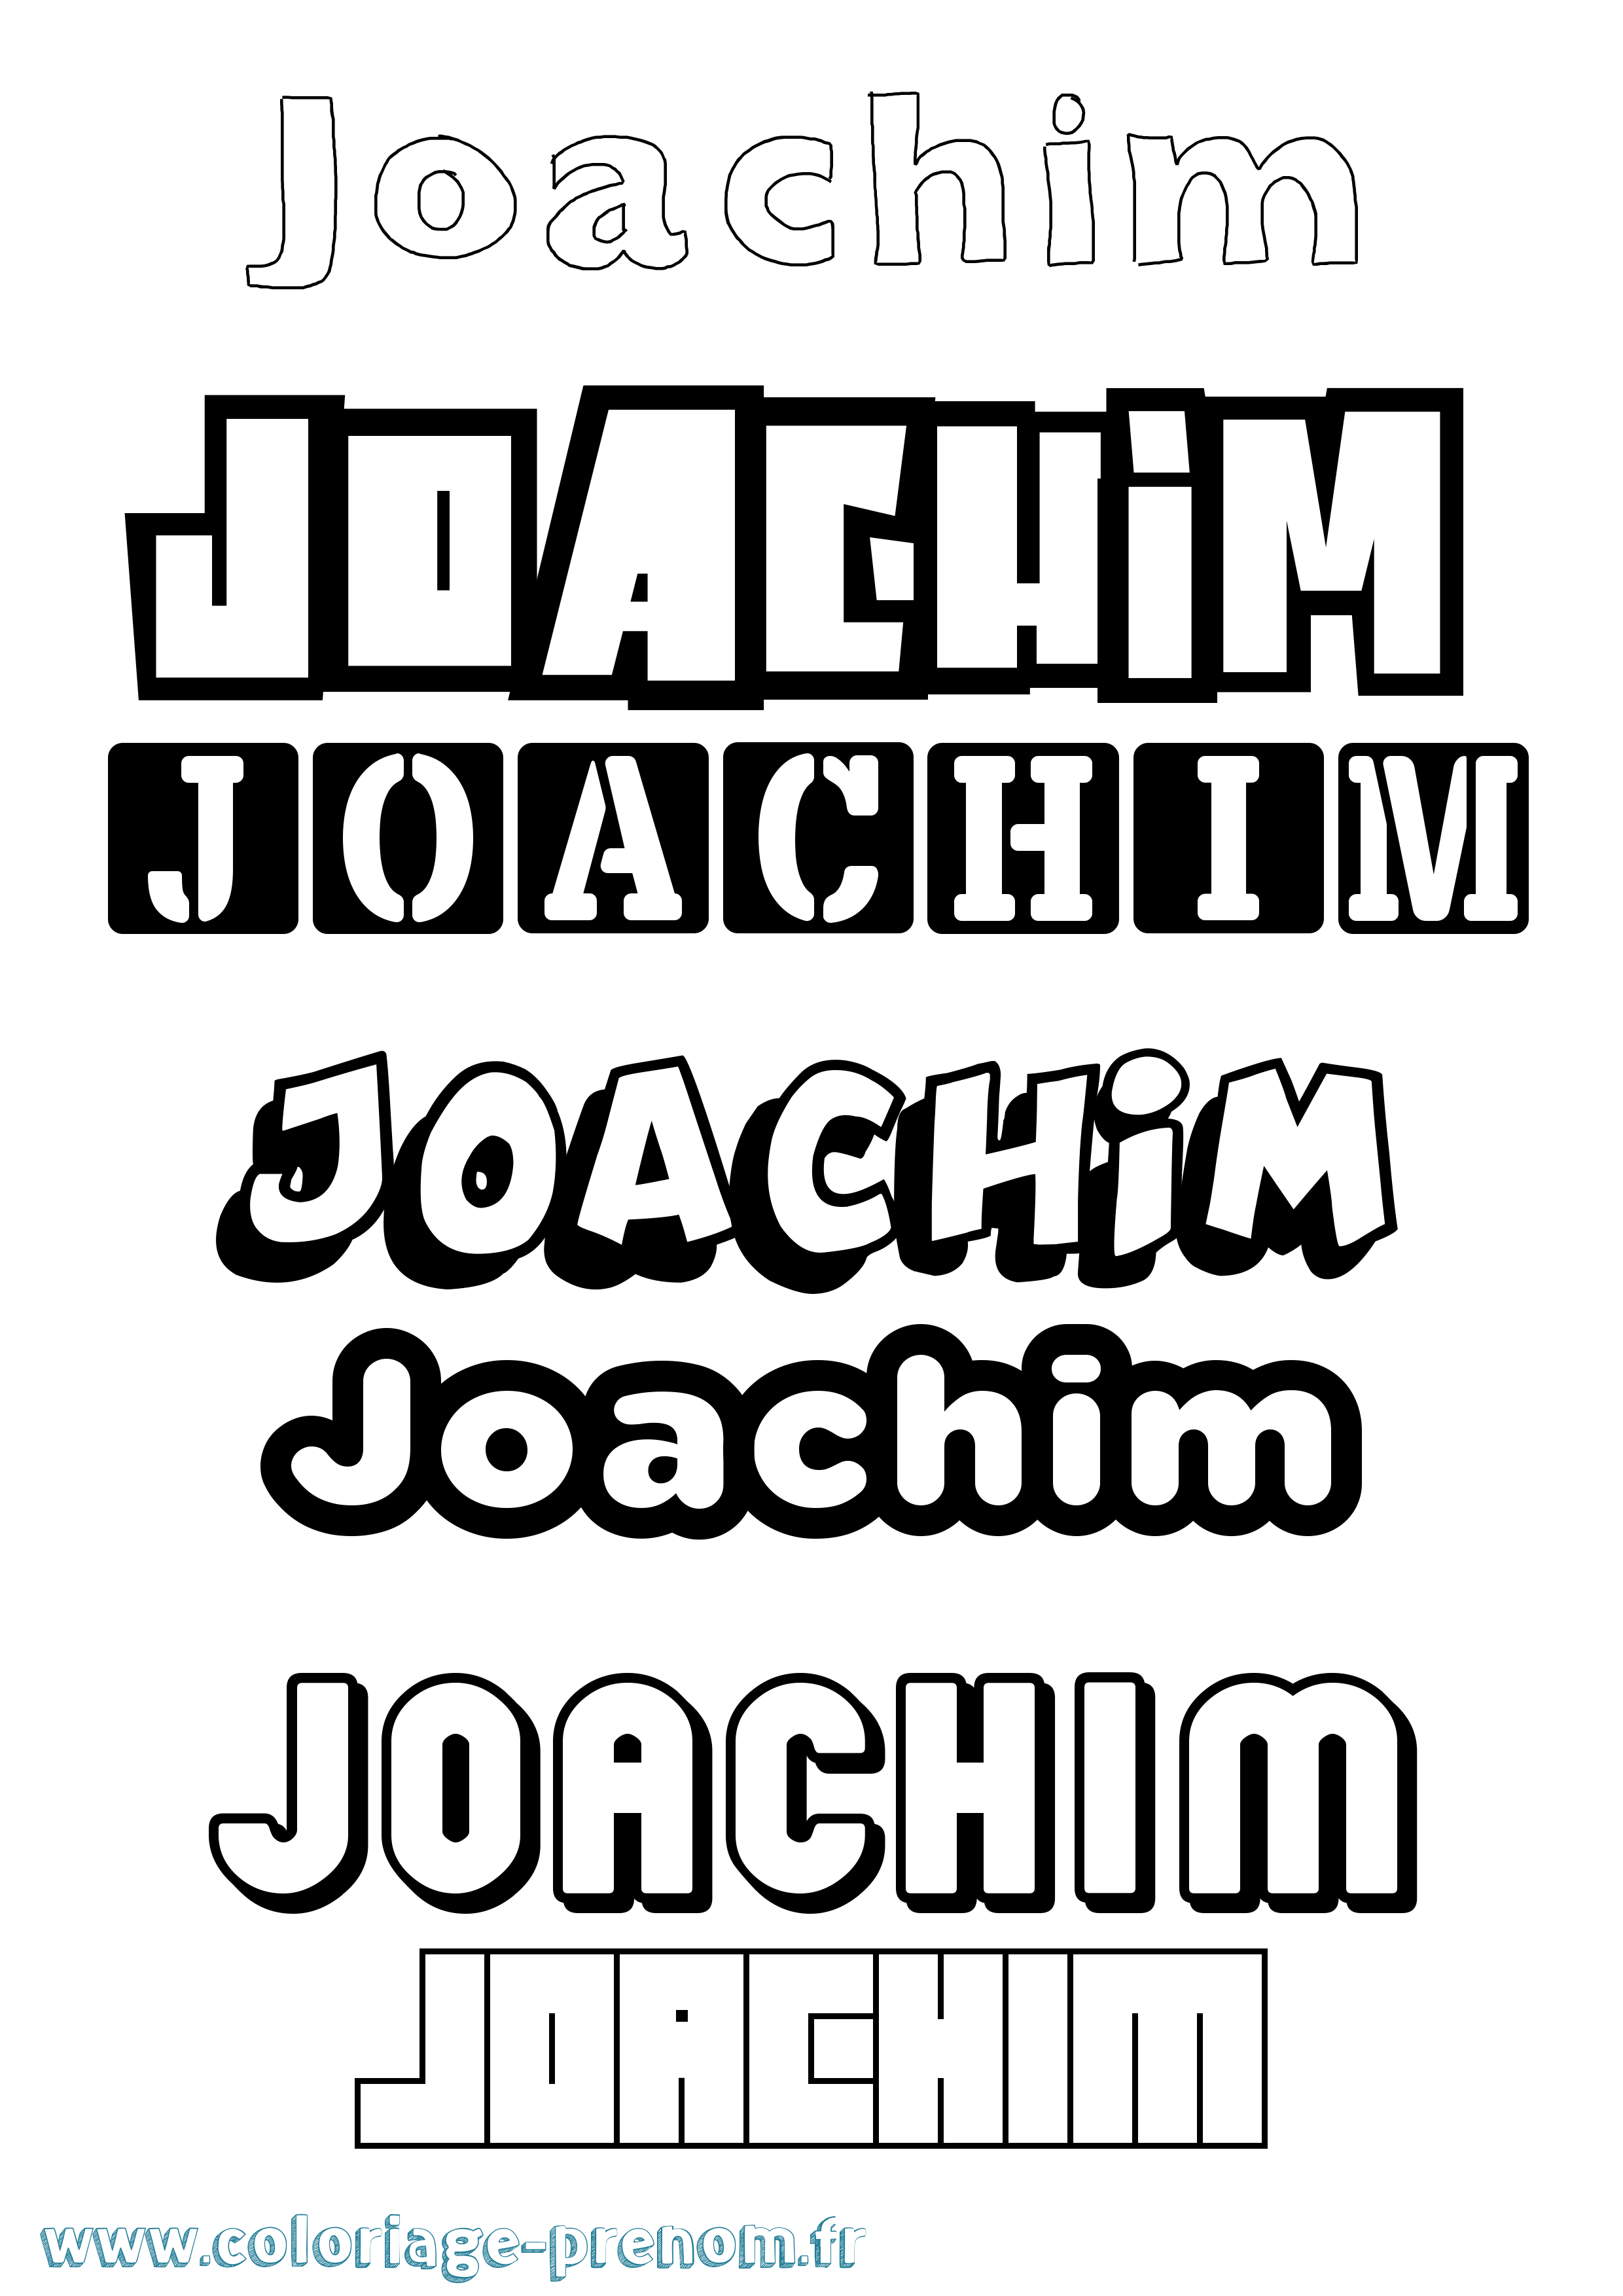 Coloriage prénom Joachim Simple